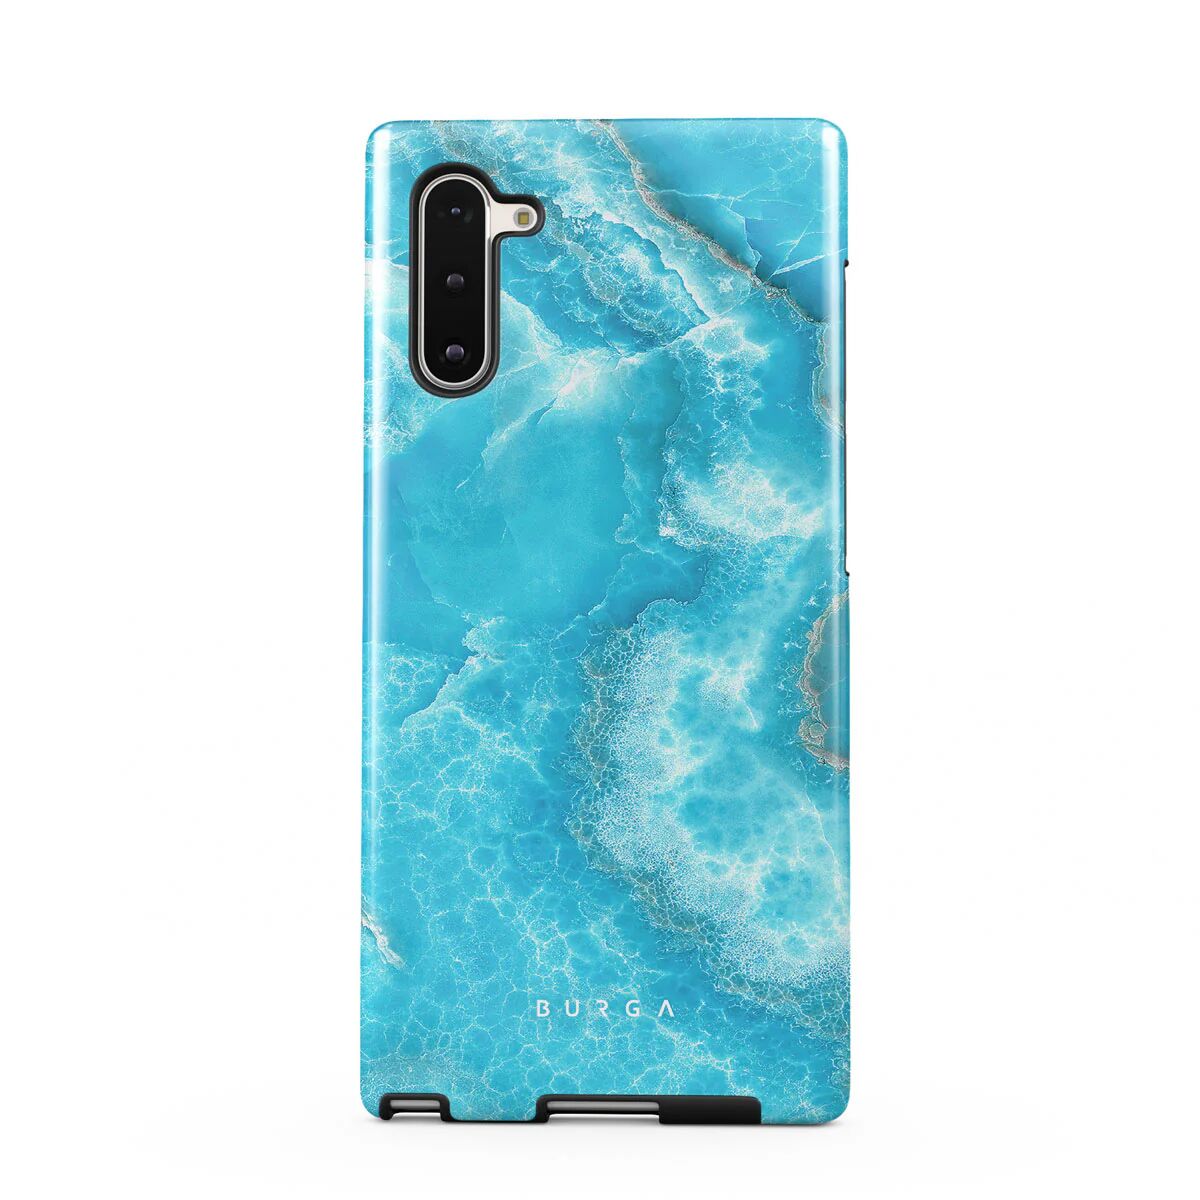 BURGA Ocean Waves - Blue Samsung Galaxy Note 10 Case